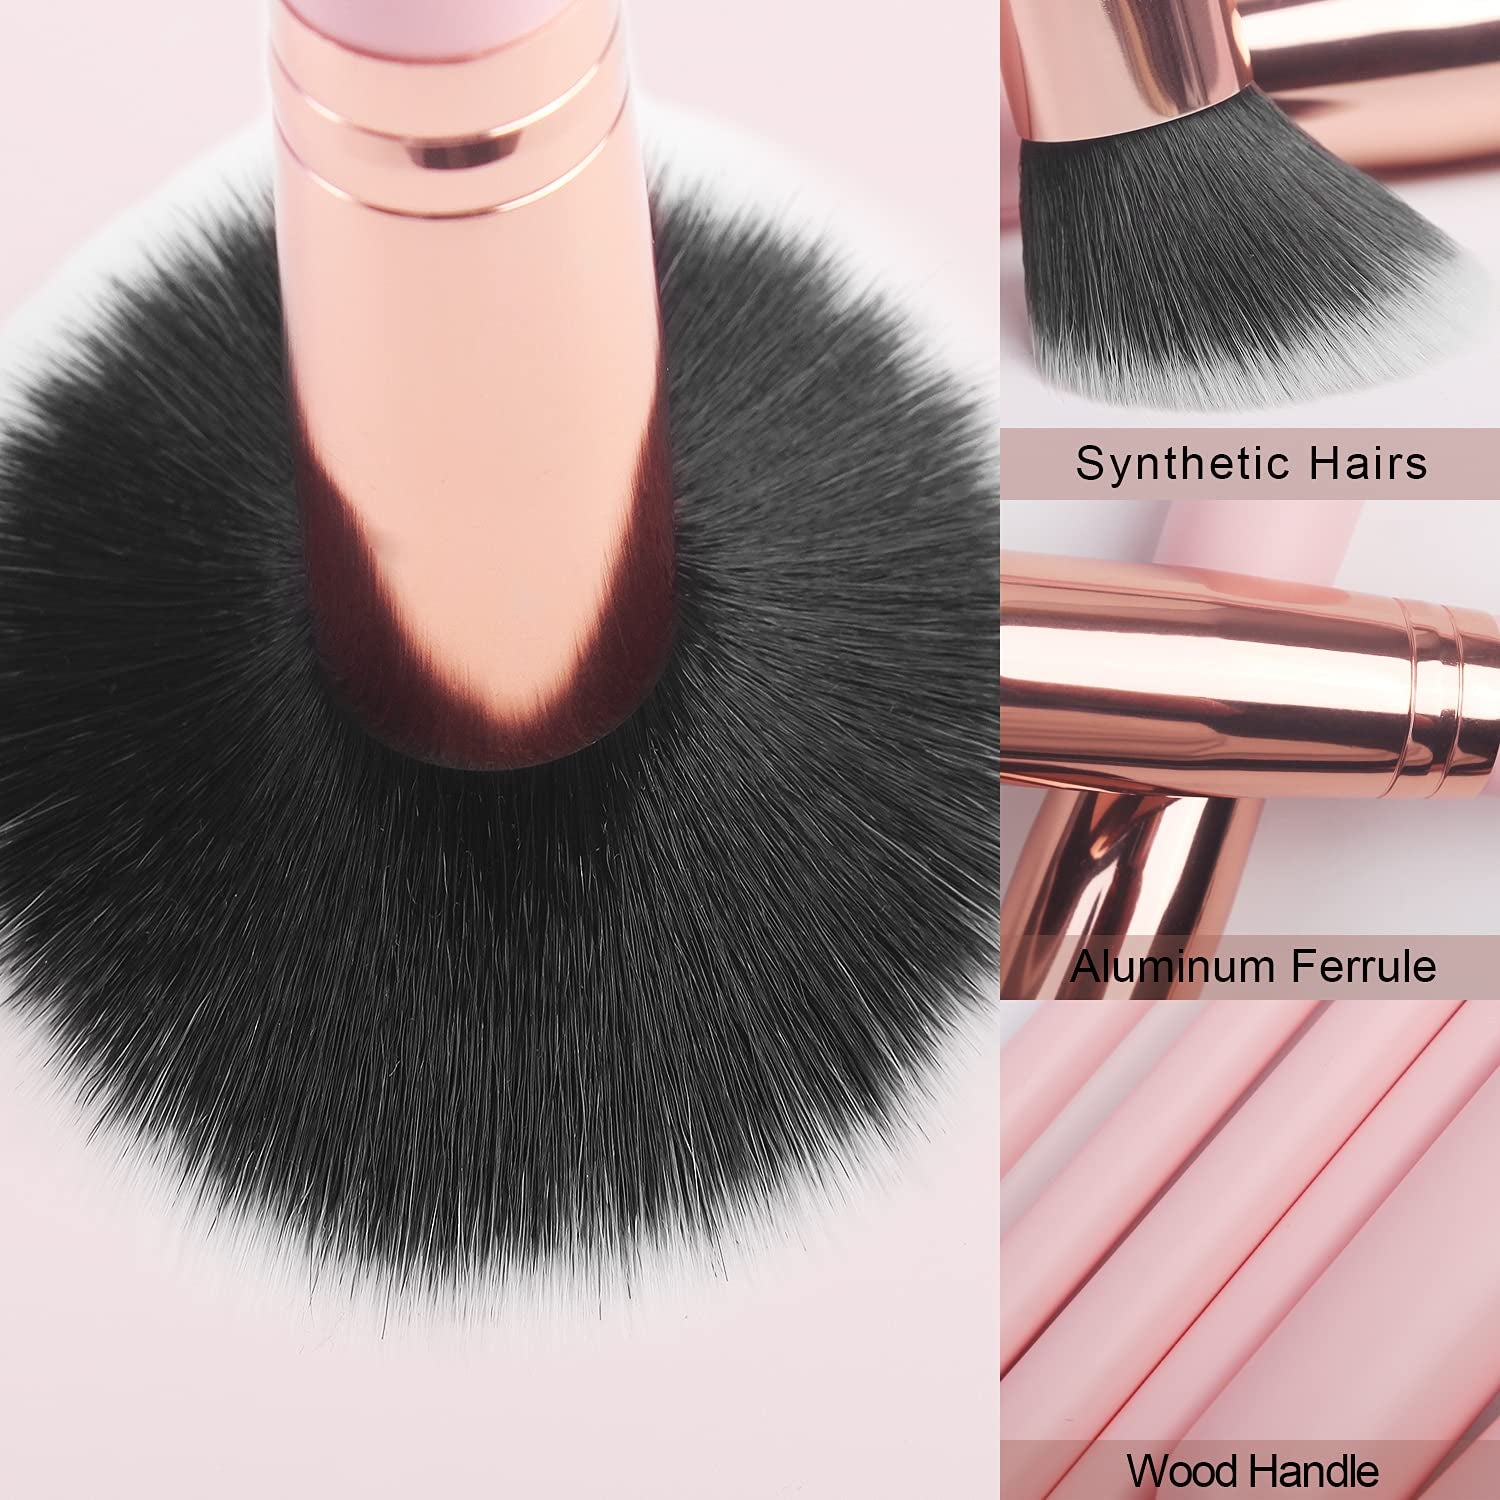 16Pcs Makeup Brushes Set with 1 Eyebrow Razor